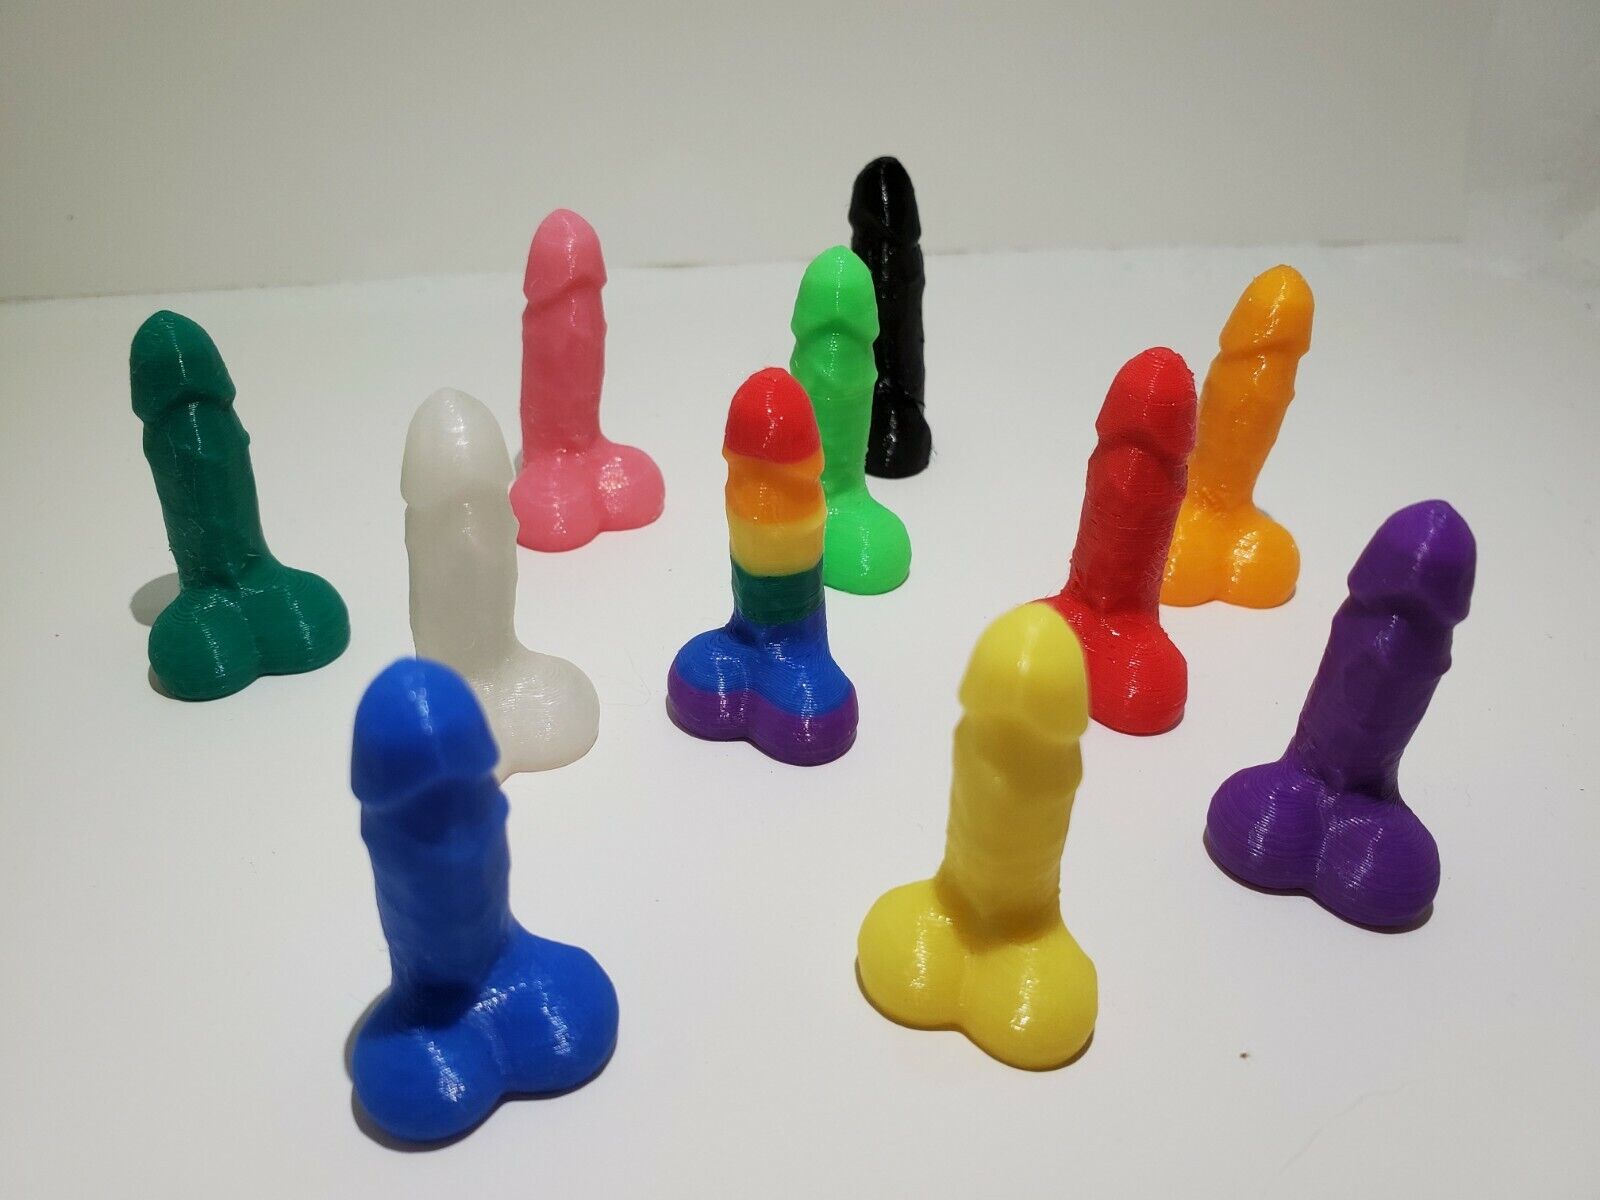 Novelty Joke Penis Dick Valve Stem Cap Covers (pack of 4) Many Colors Prank Gag